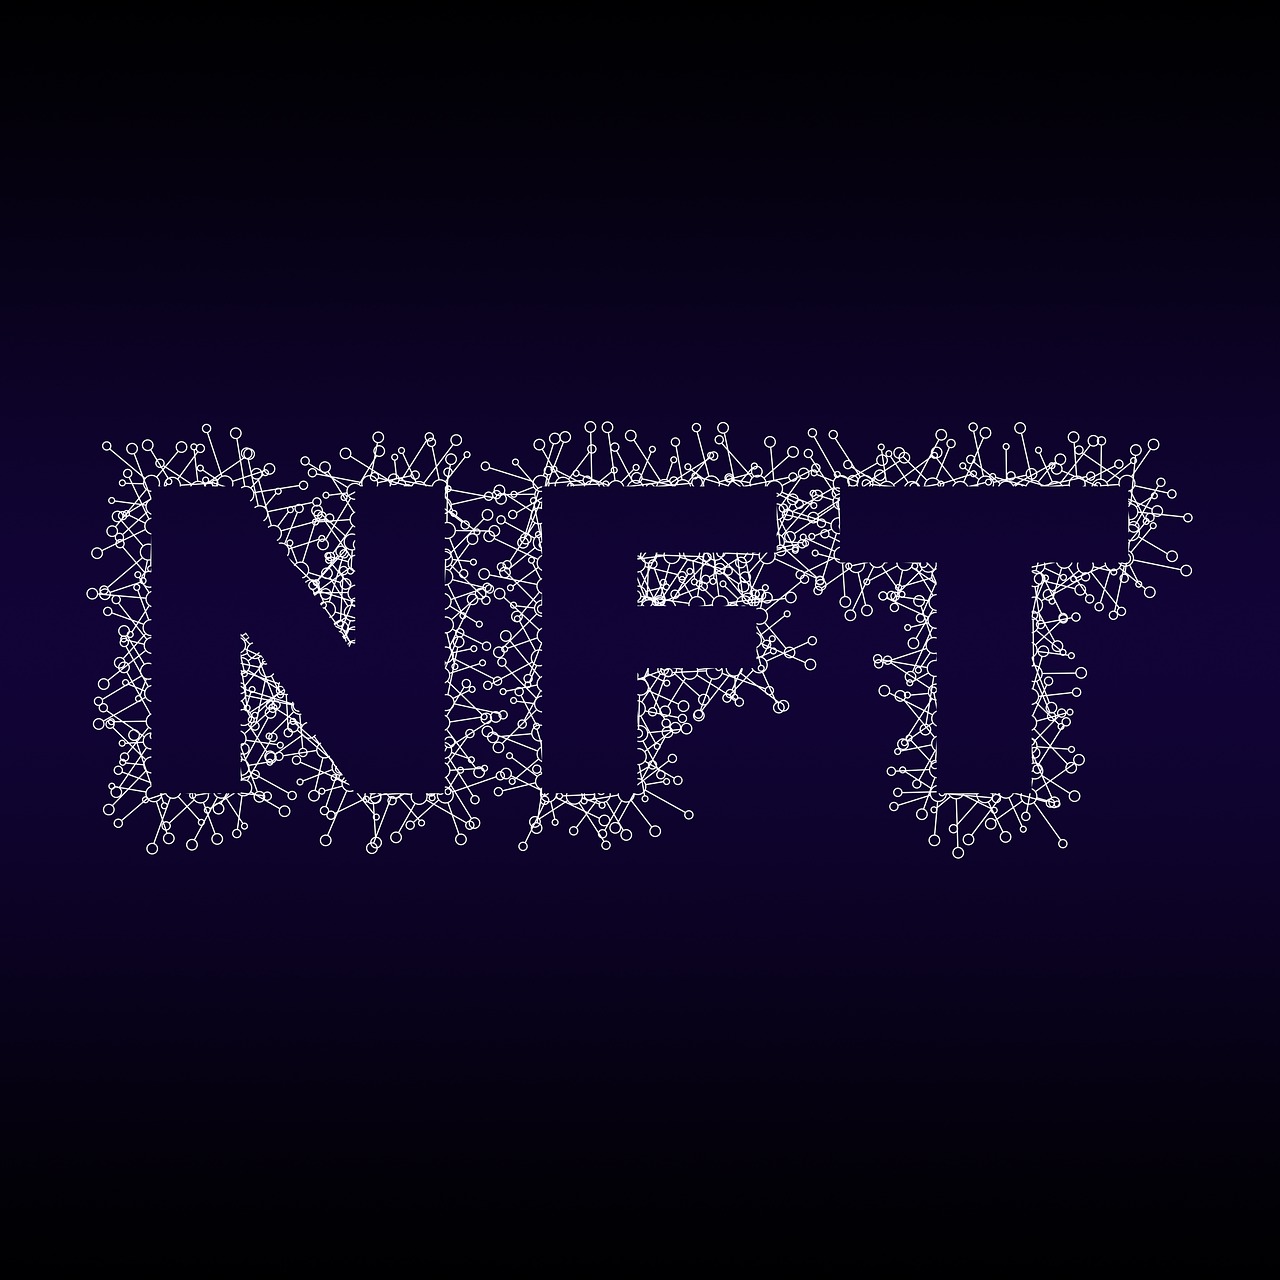 NFT Events, Conferences, Meetups and Live Streams